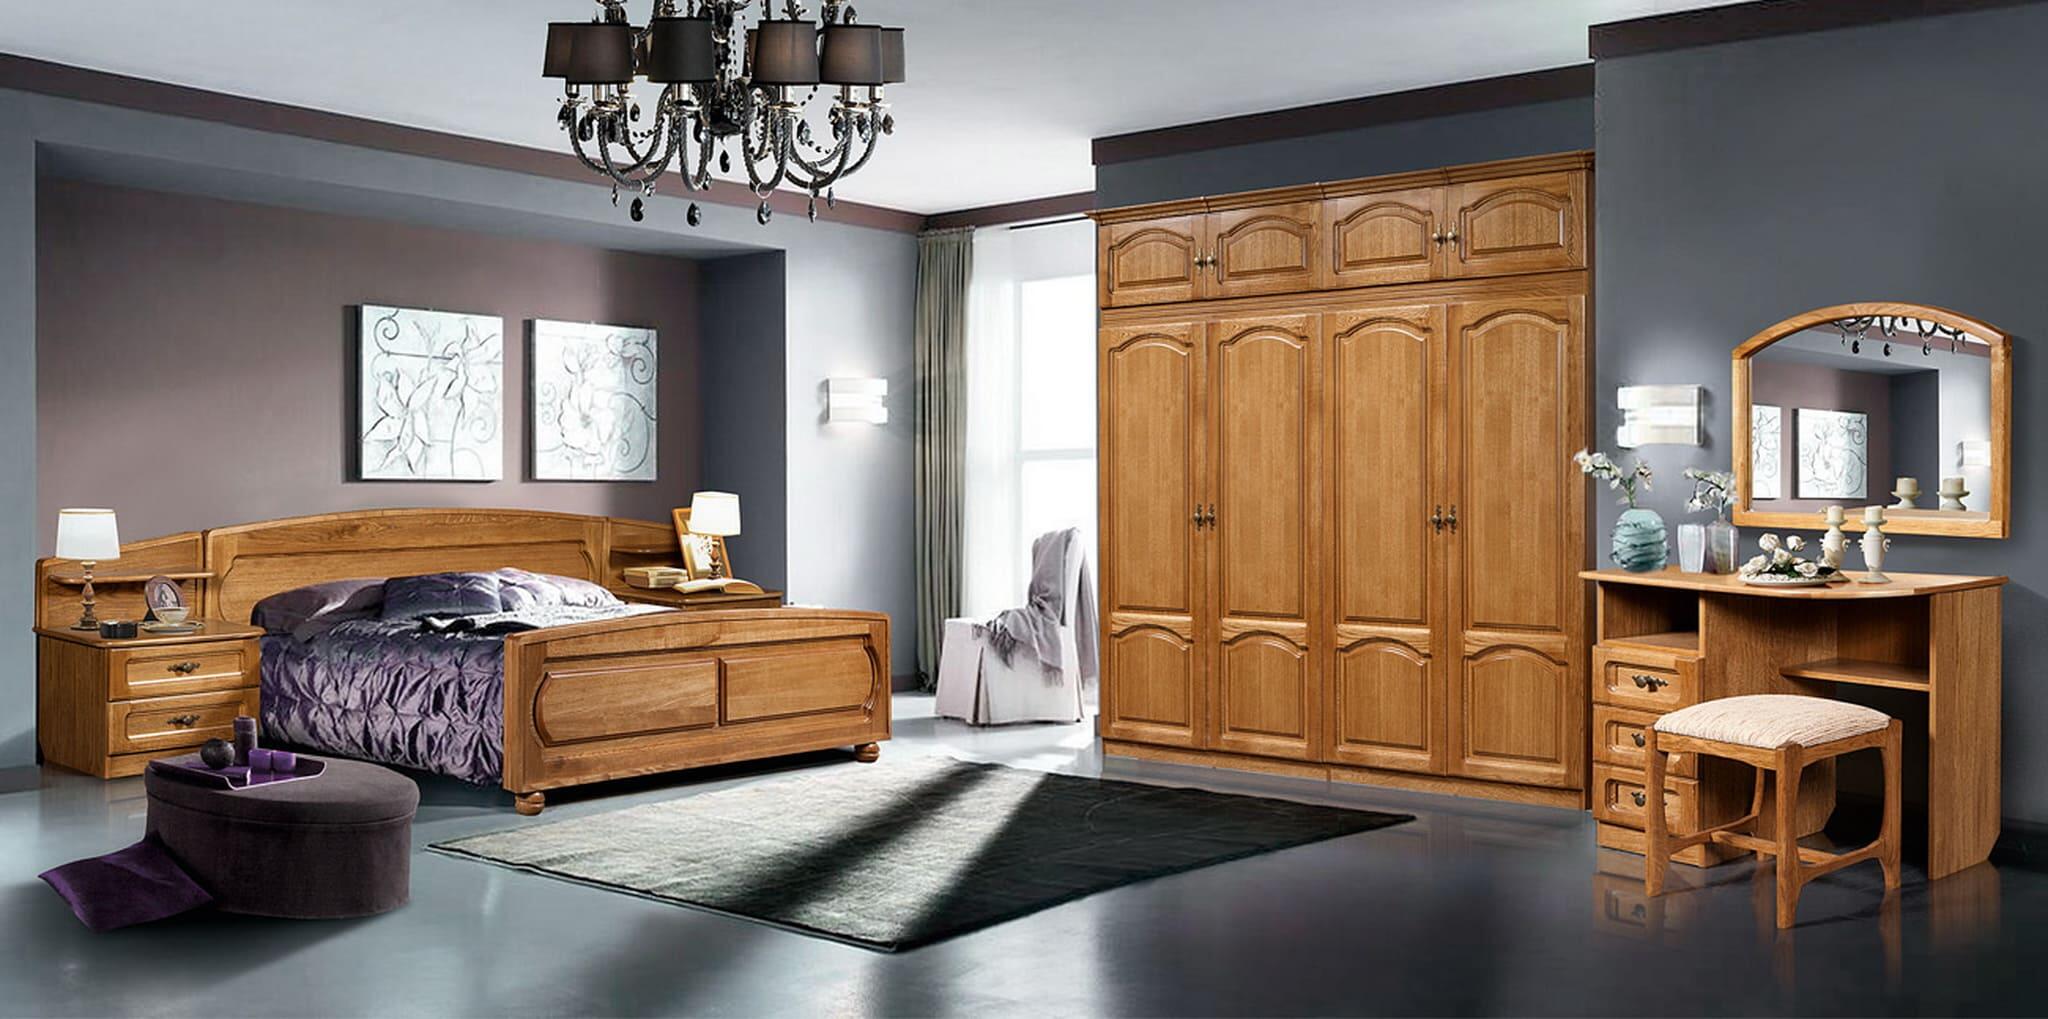 Набор мебели для спальни «Купава-1»  ГМ 8420 (дуб)